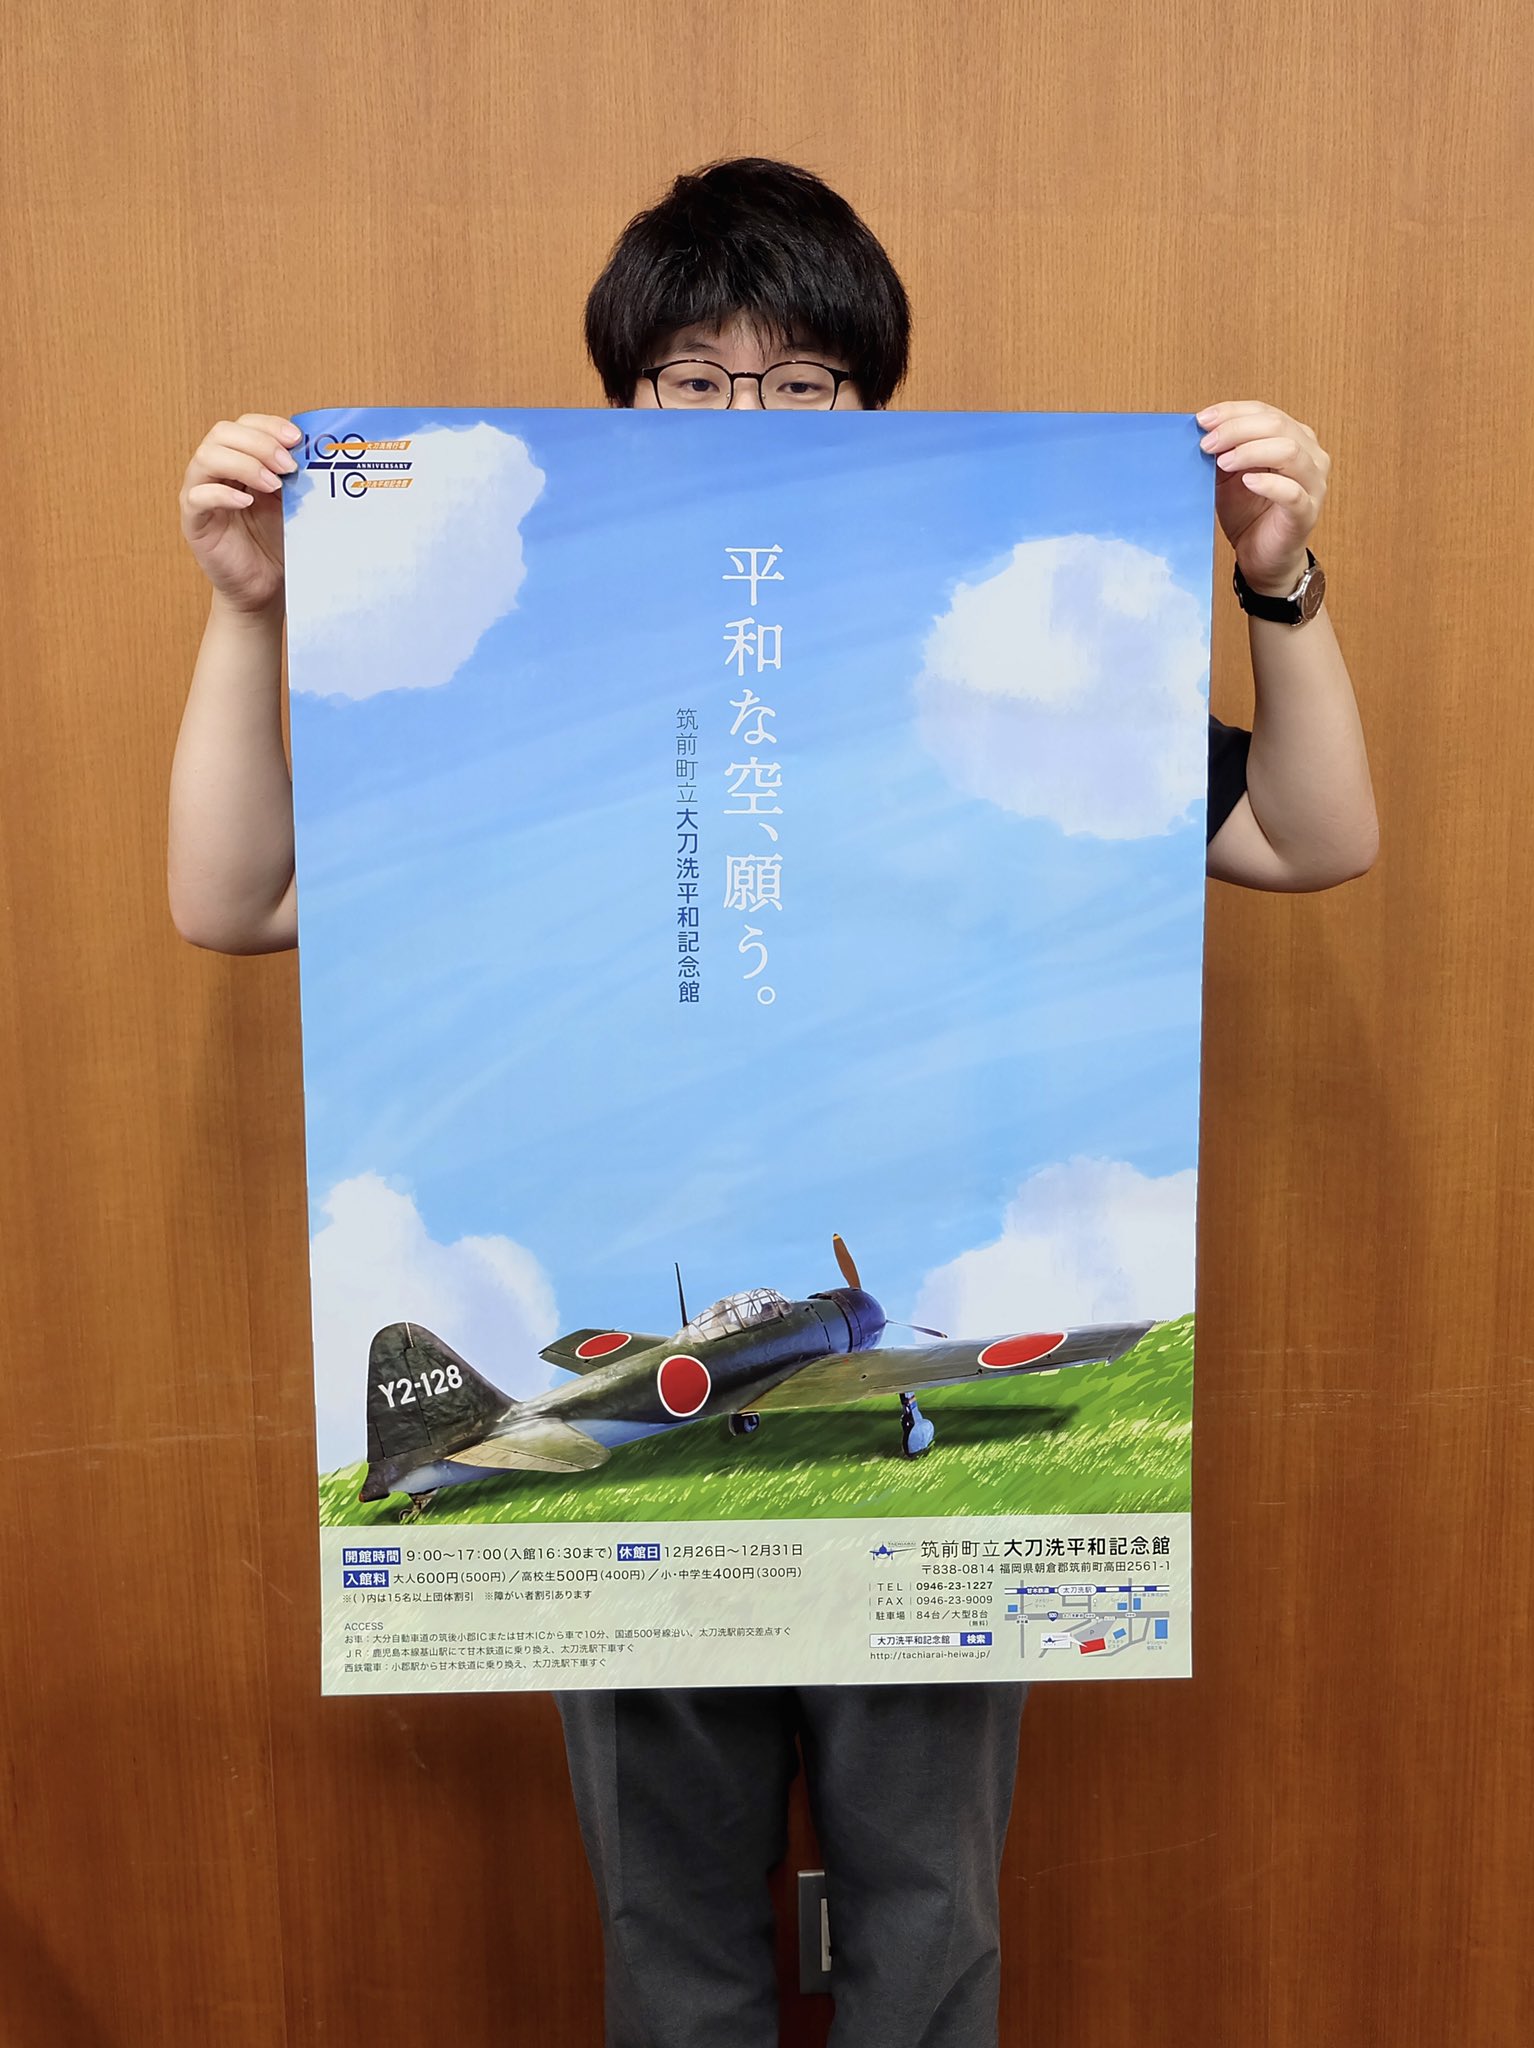 A6m232 中村泰三 報国515資料館管理人 Chikuzen Okoshi Tachiarai Pmm 平和な 空 願う 純真なる素晴らしい言葉とイラスト そしてこのポスターを見た方には 願った平和な空を 現実論で考え 行動する に是非ともつなげて欲しいですね